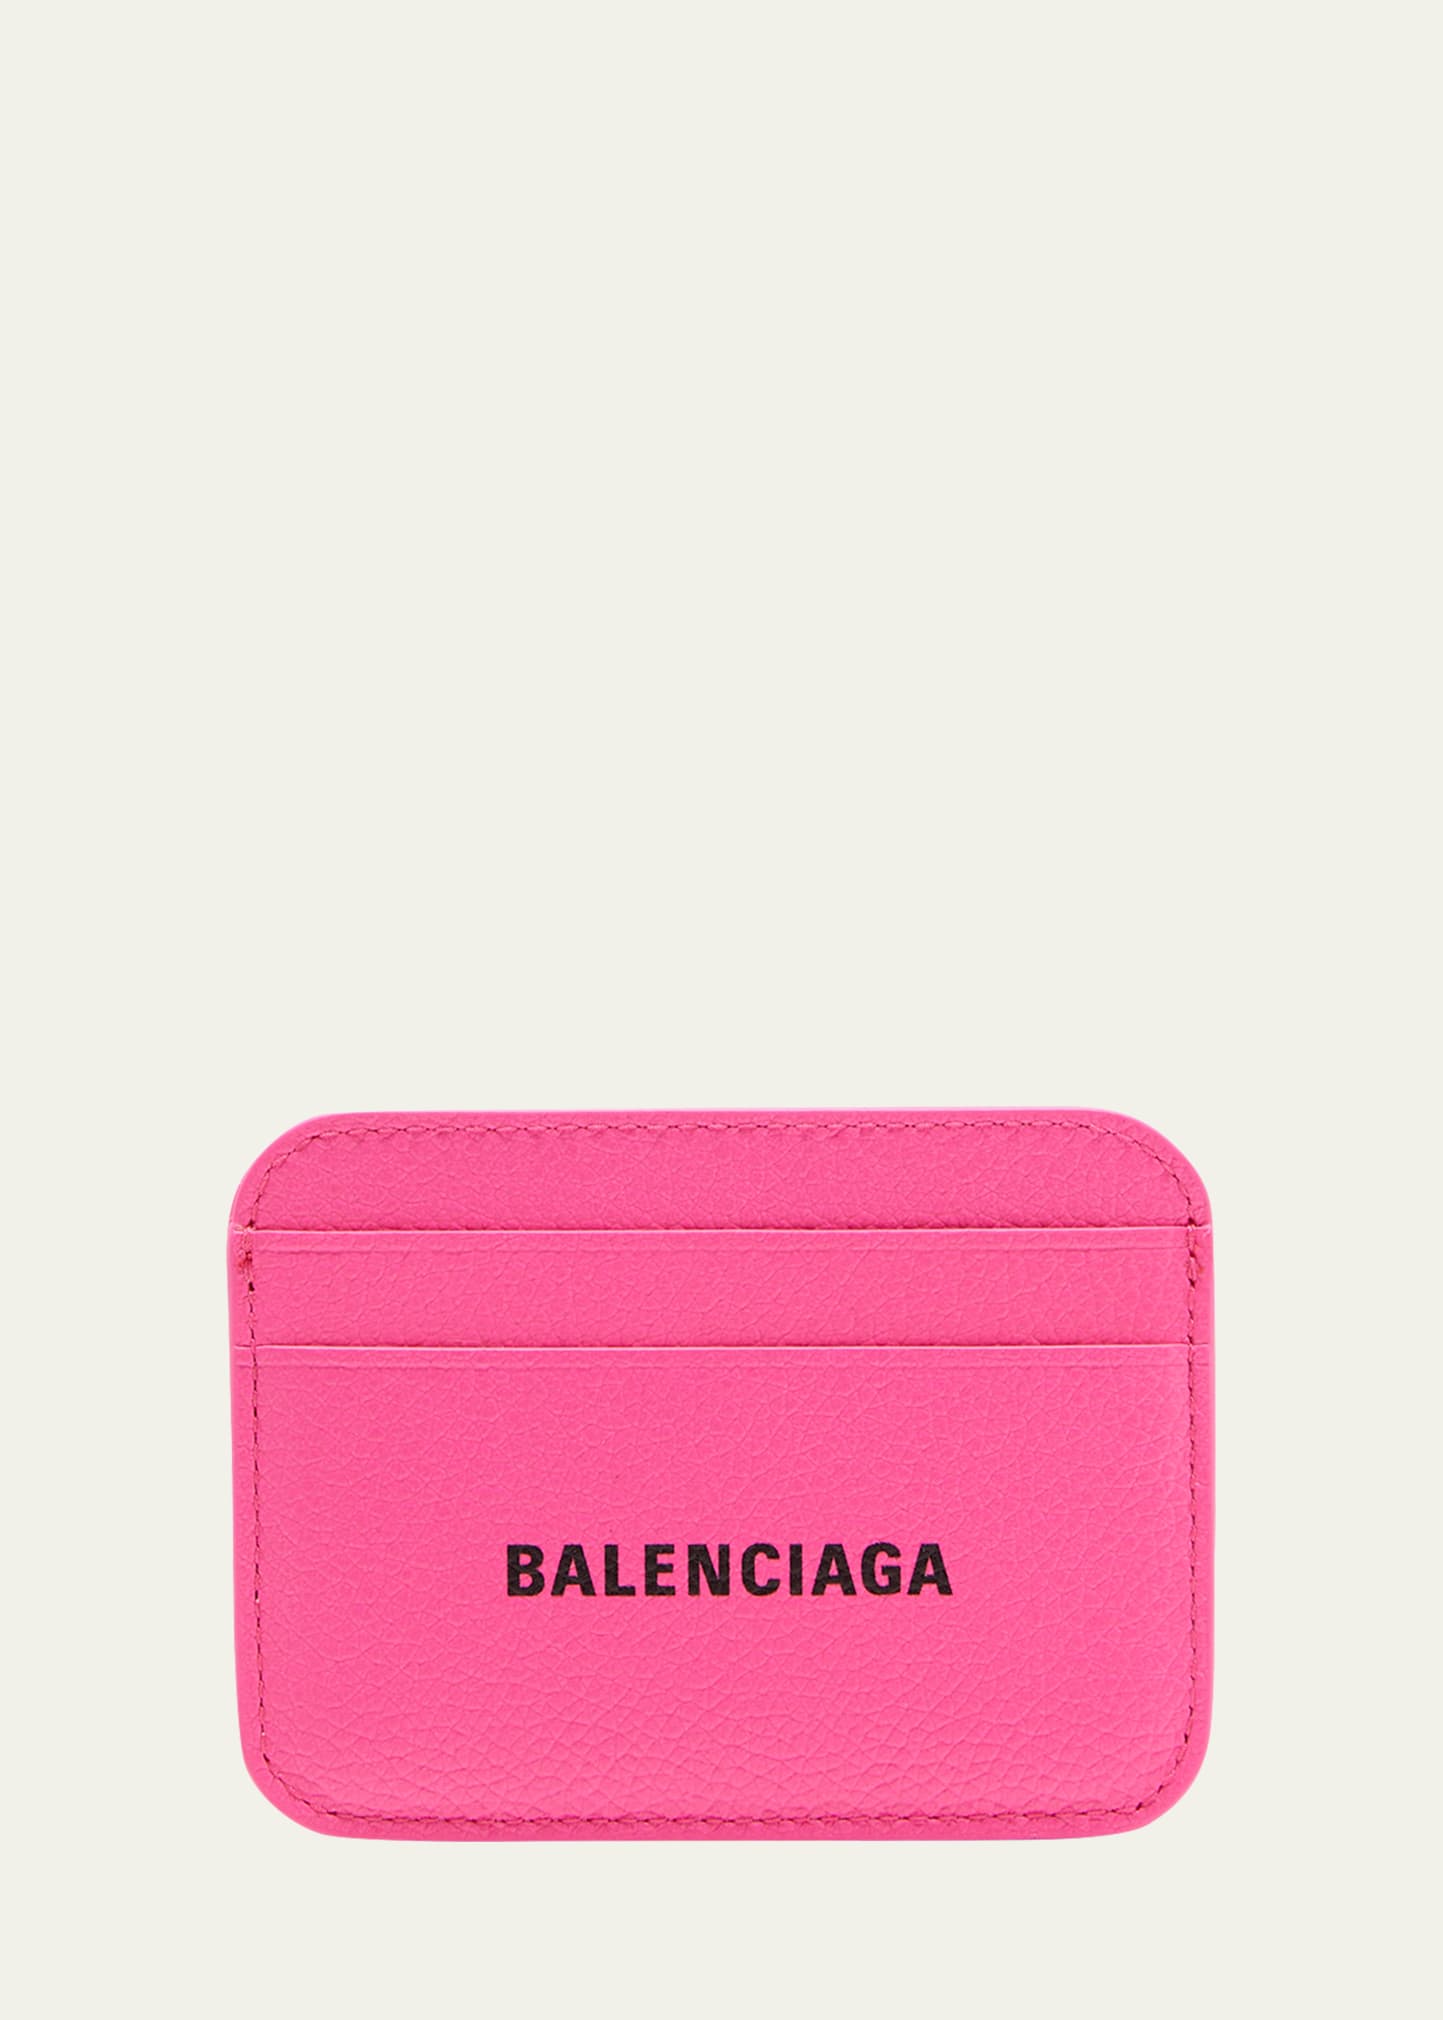 BALENCIAGA CASH LOGO LEATHER CARD HOLDER